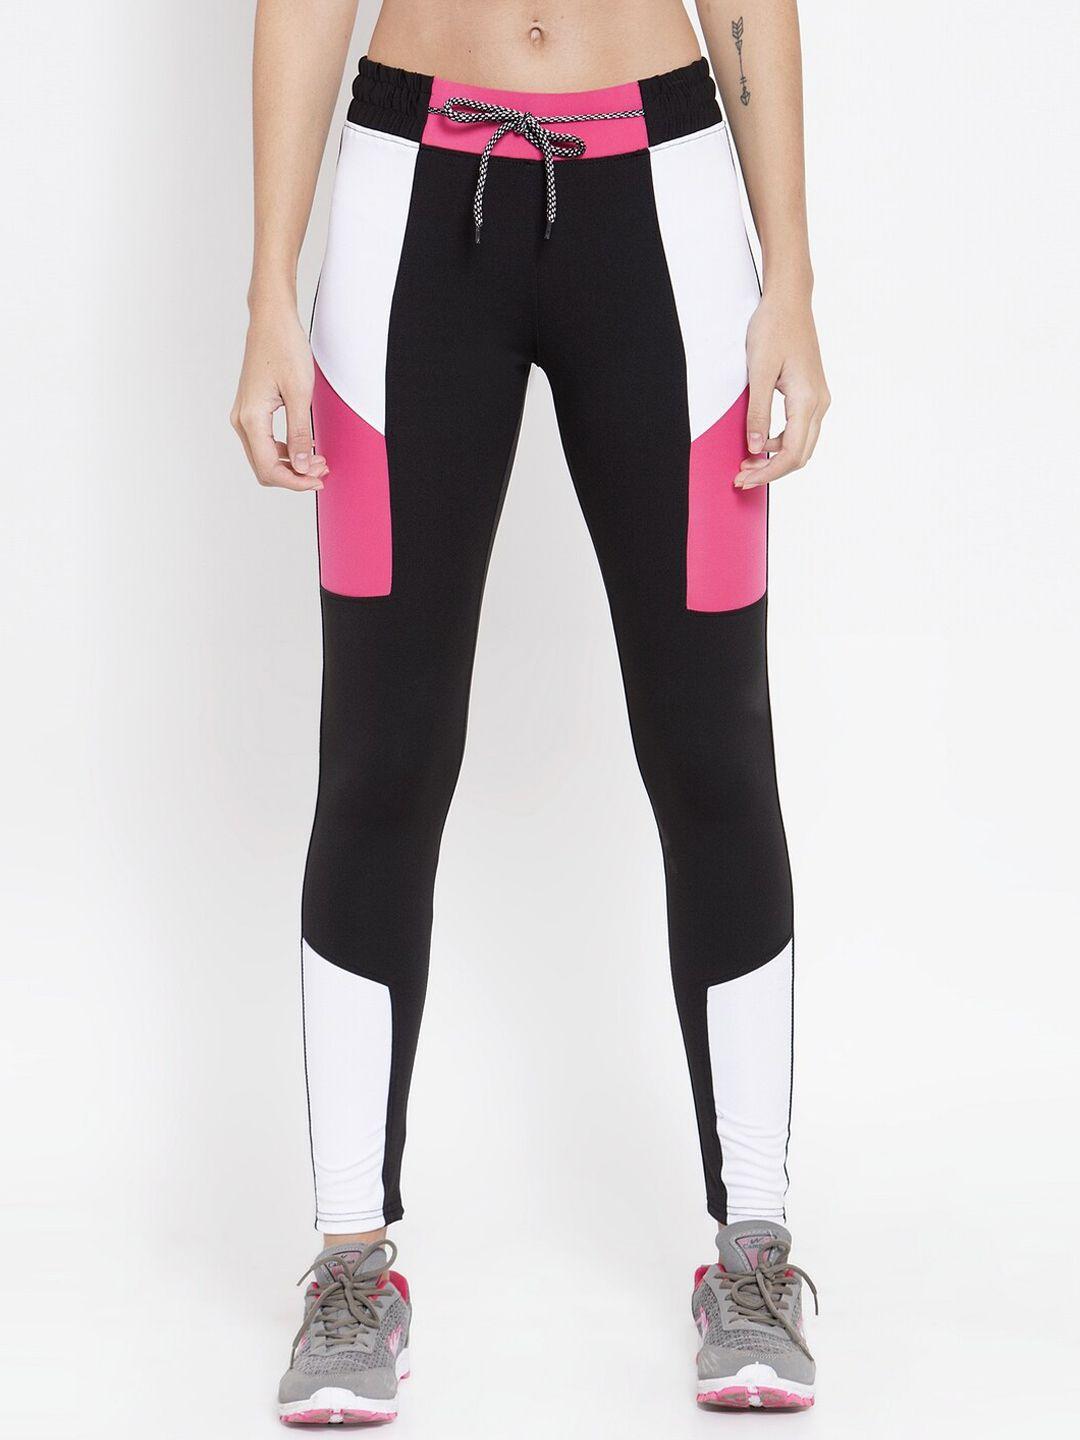 clora creation women black & pink colourblocked slim-fit training tights